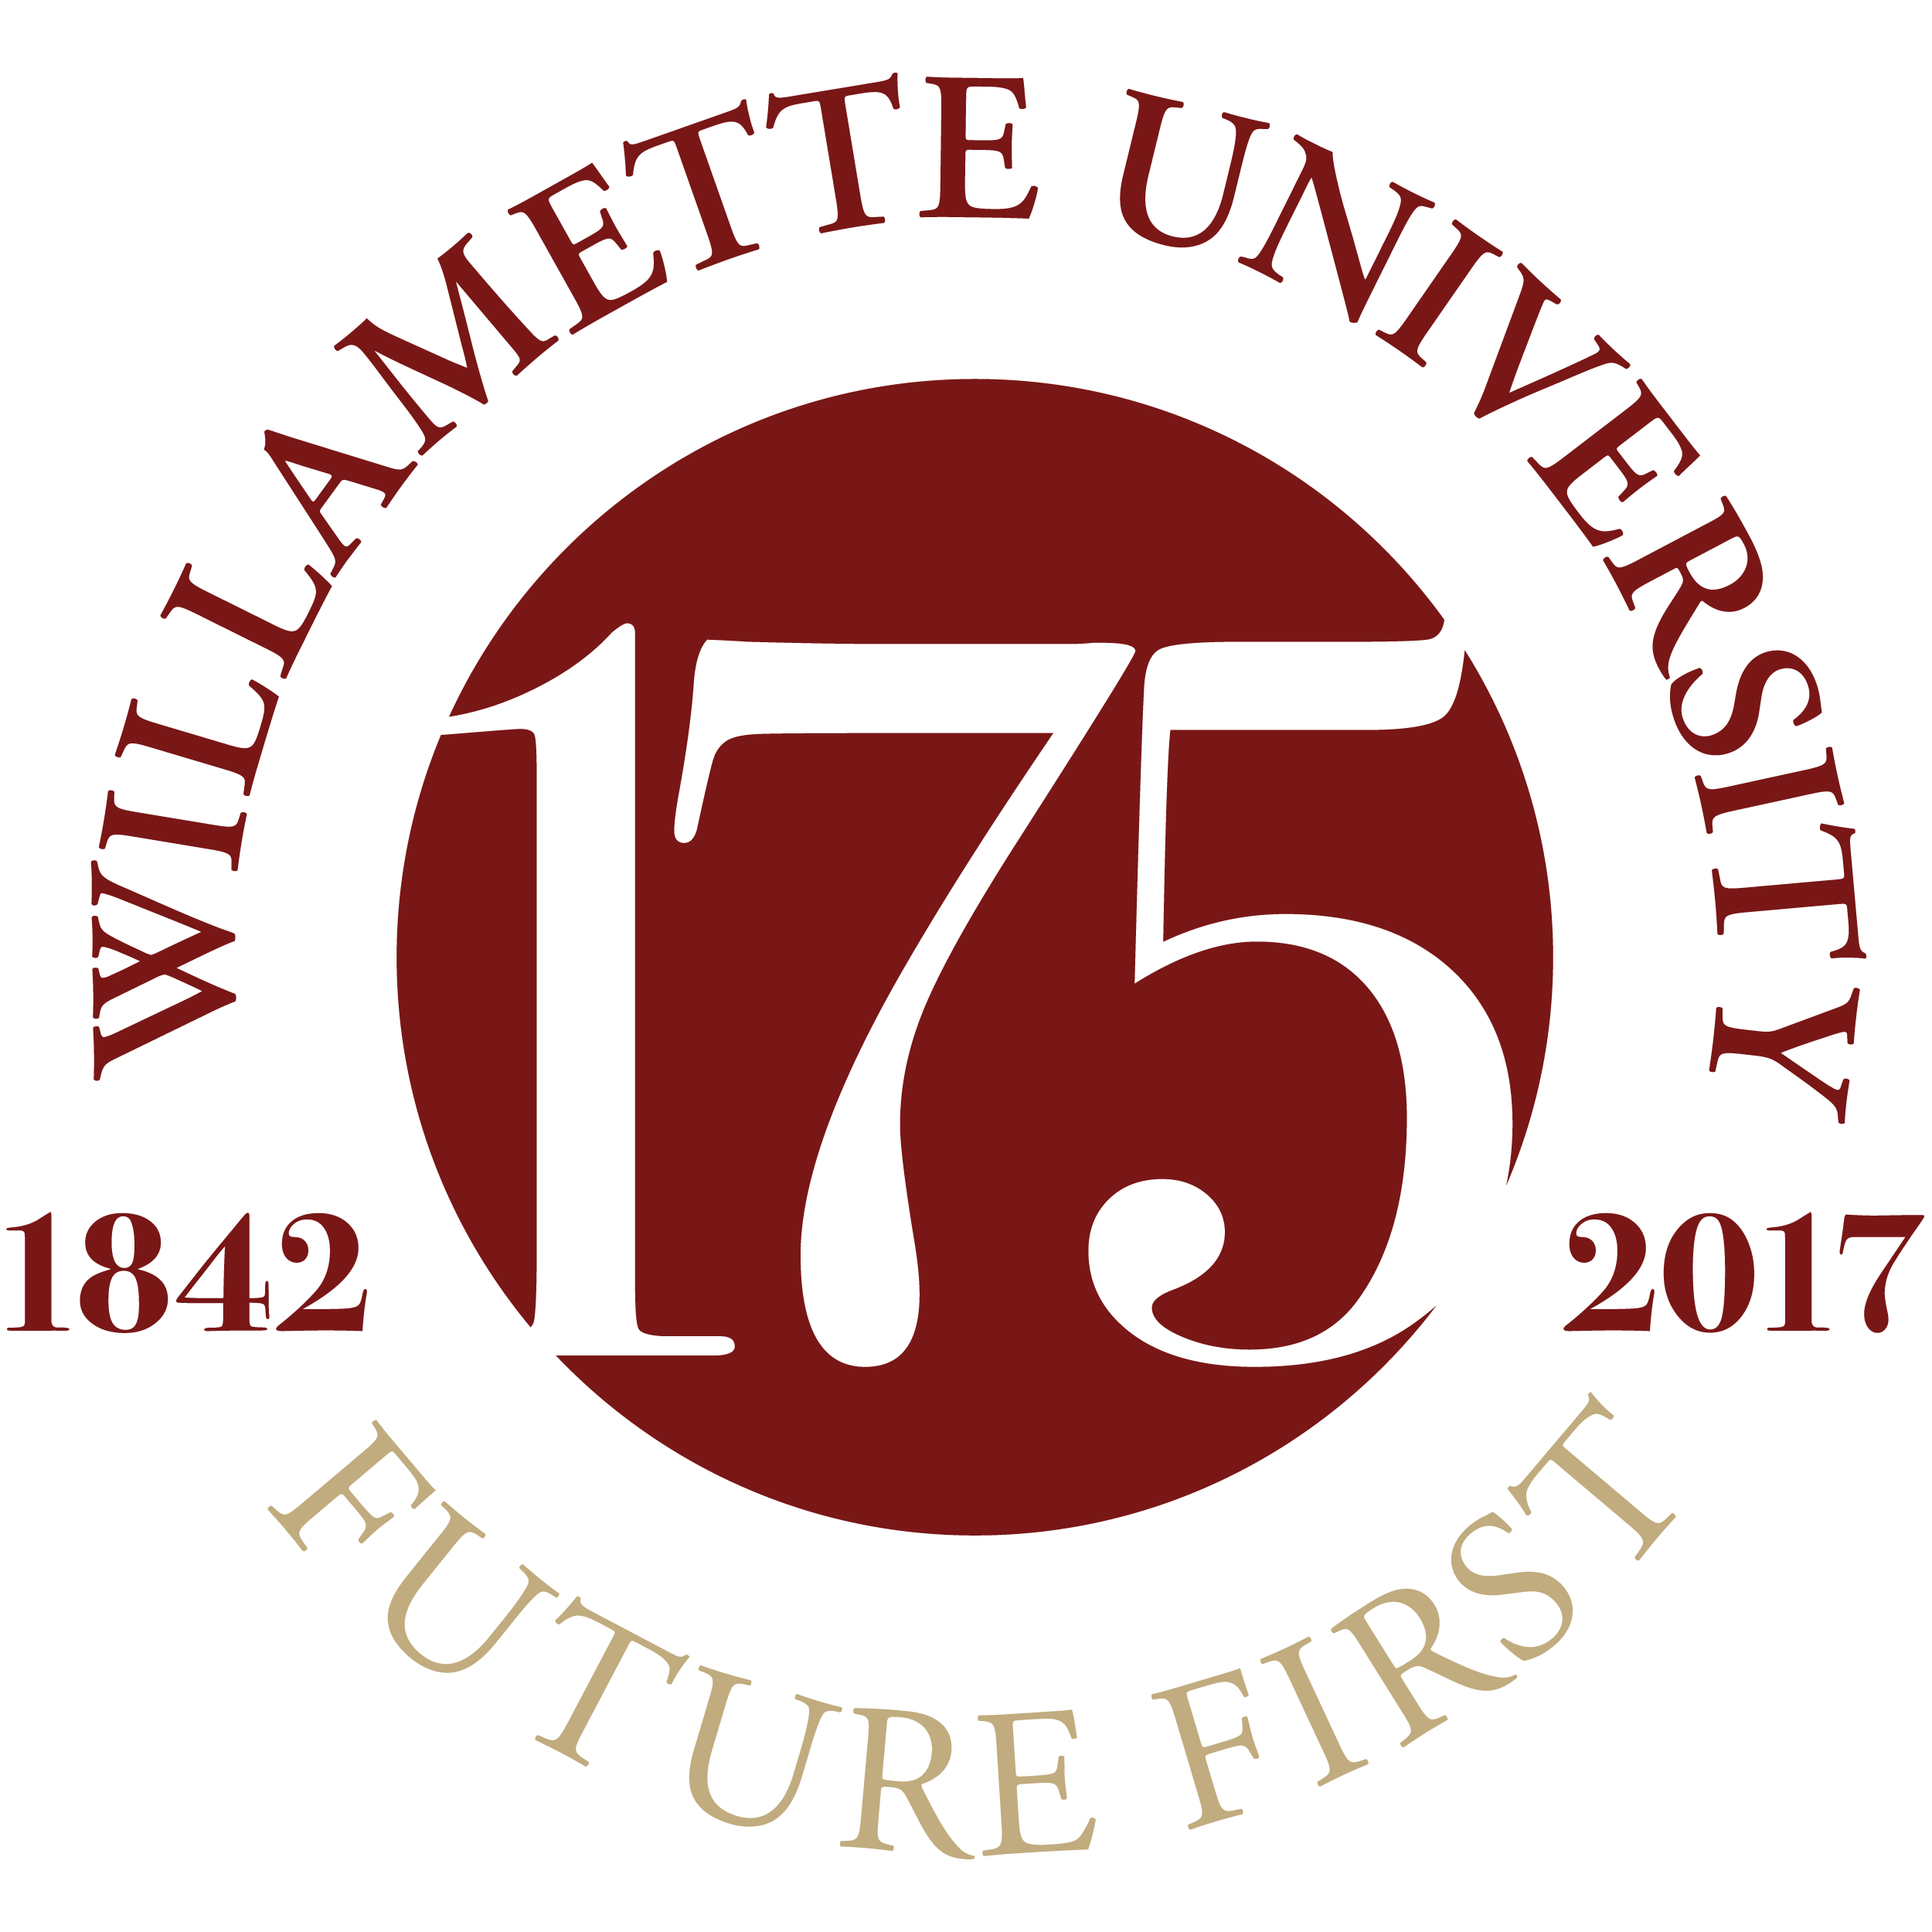 Willamette University 175th anniversary logo